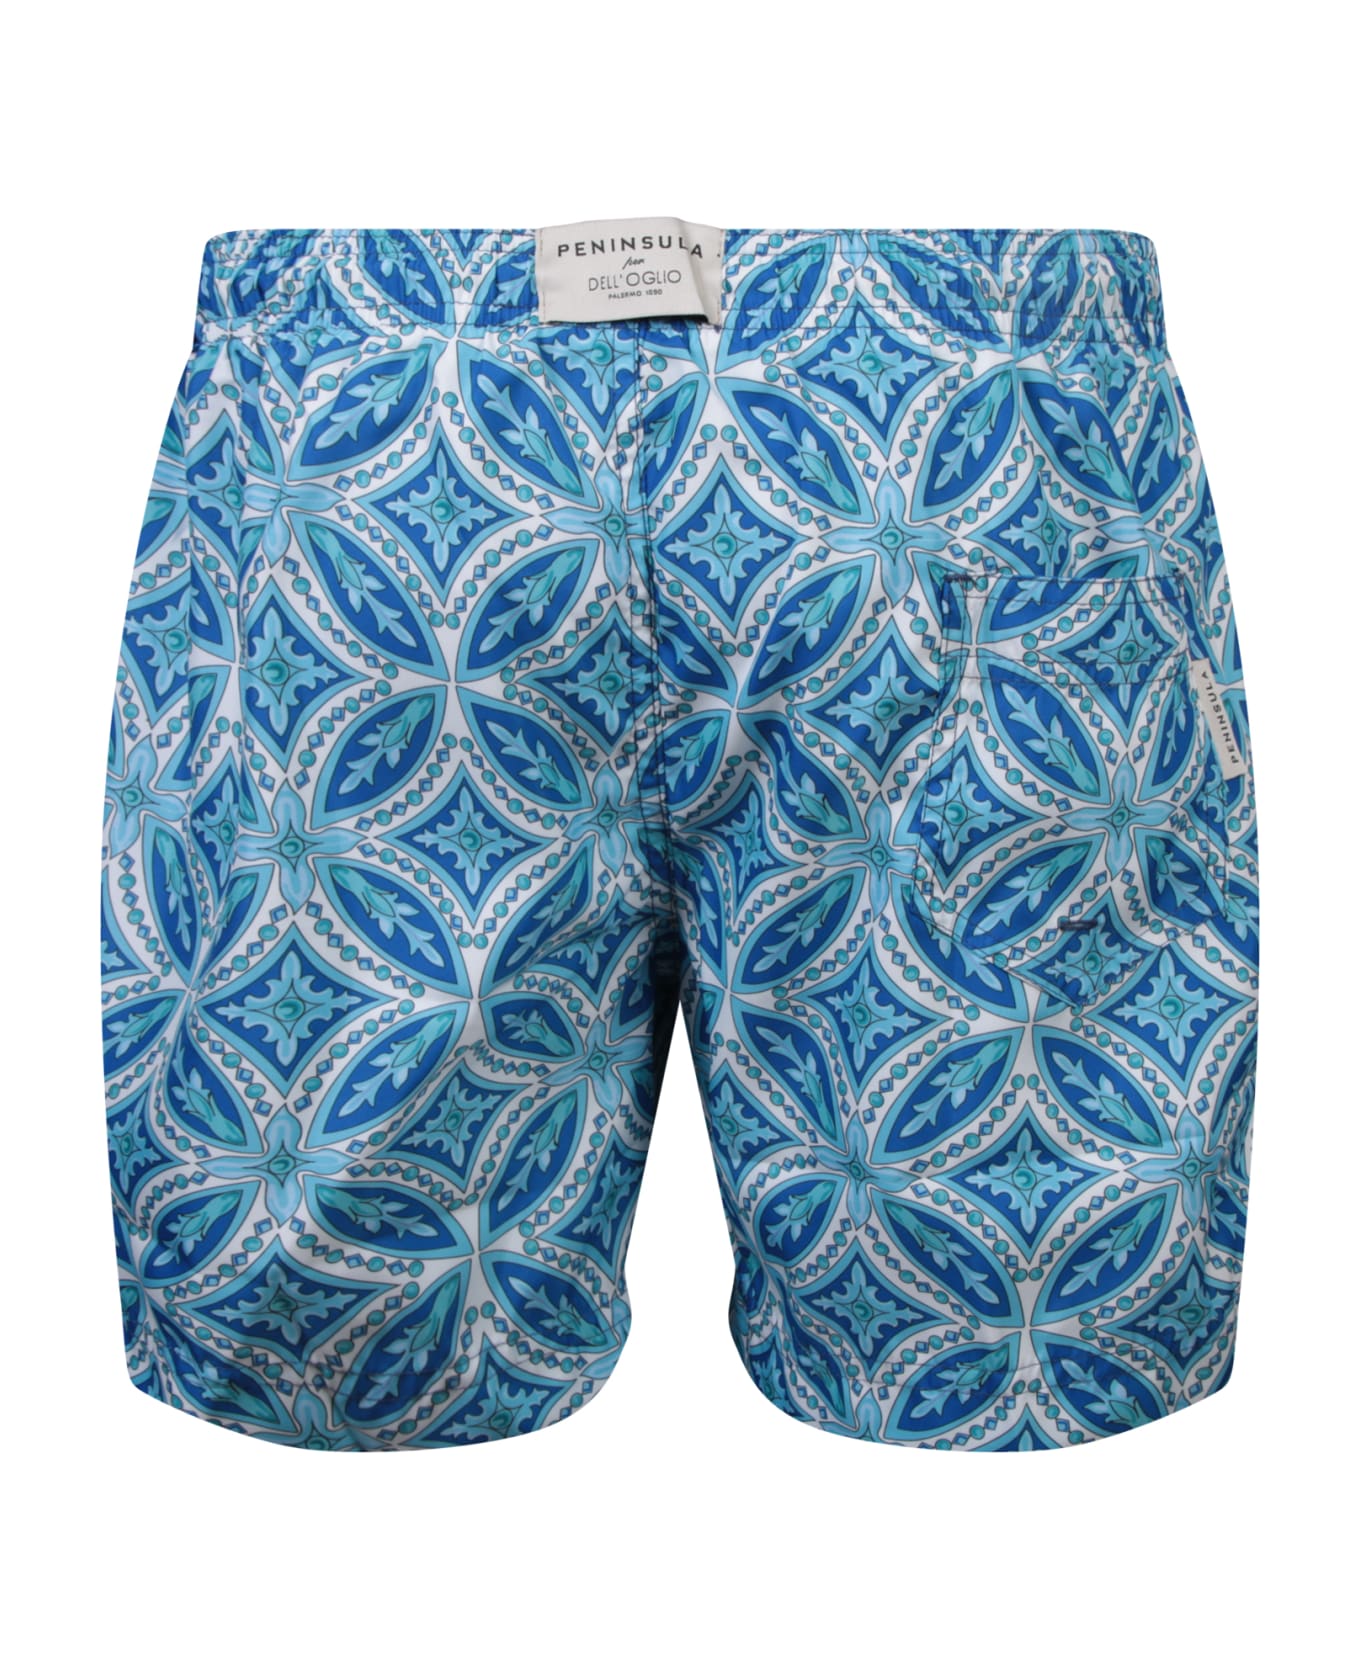 Peninsula Swimwear Patterned Swim Shorts In Sky Blue/blue/white By Peninsula - White